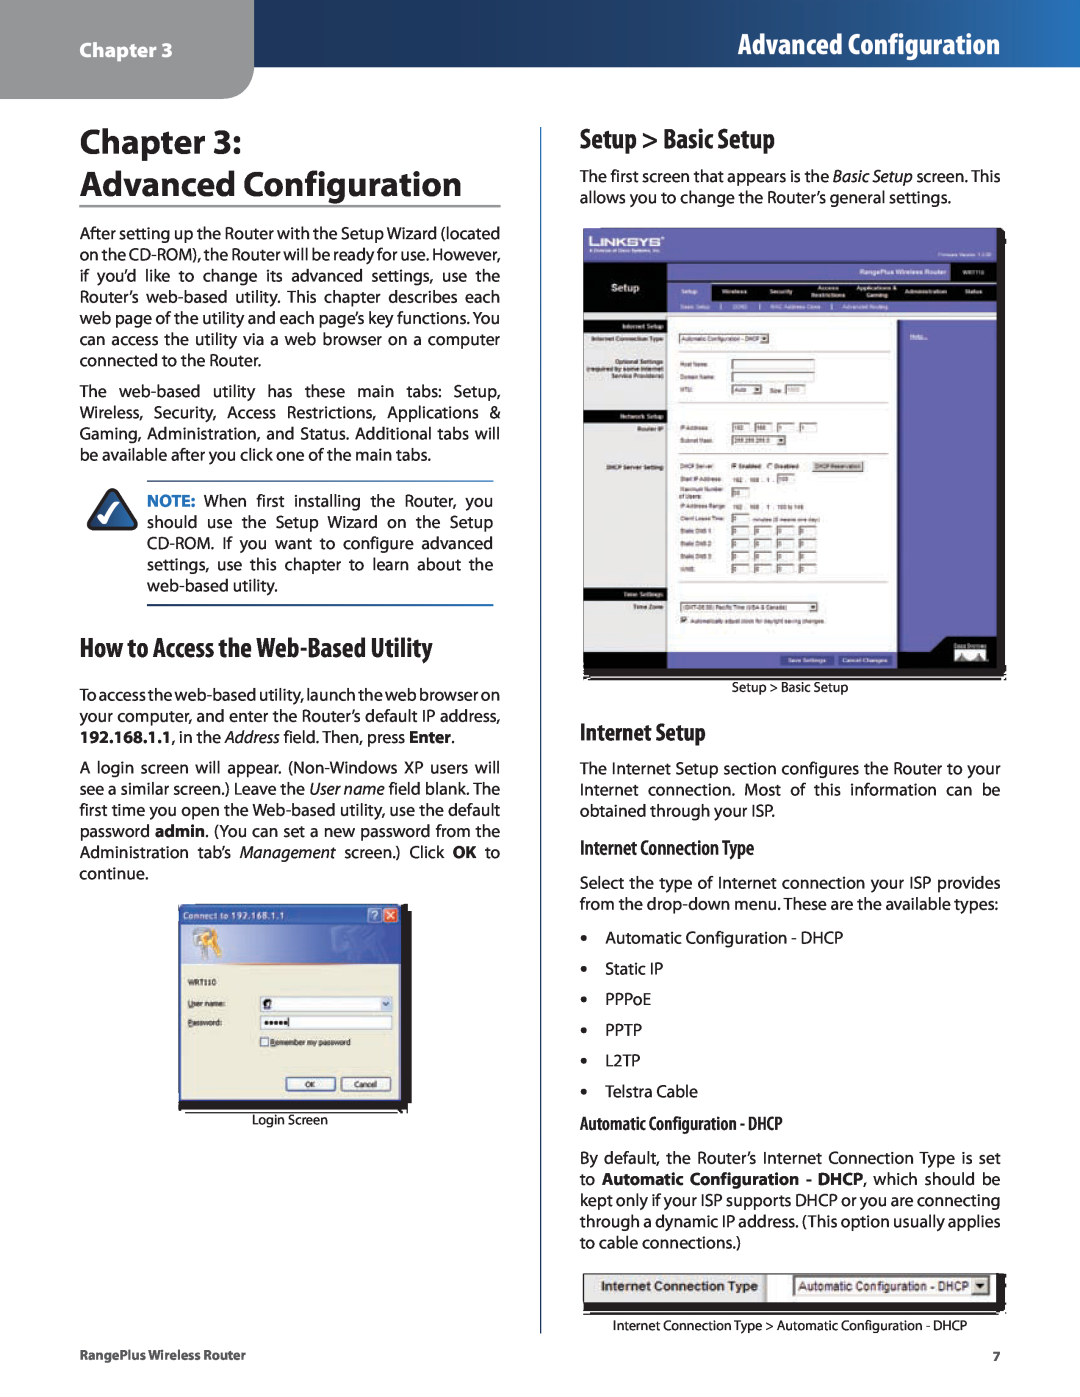 Cisco Systems WRT110 manual Chapter Advanced Configuration, How to Access the Web-Based Utility, Setup Basic Setup 